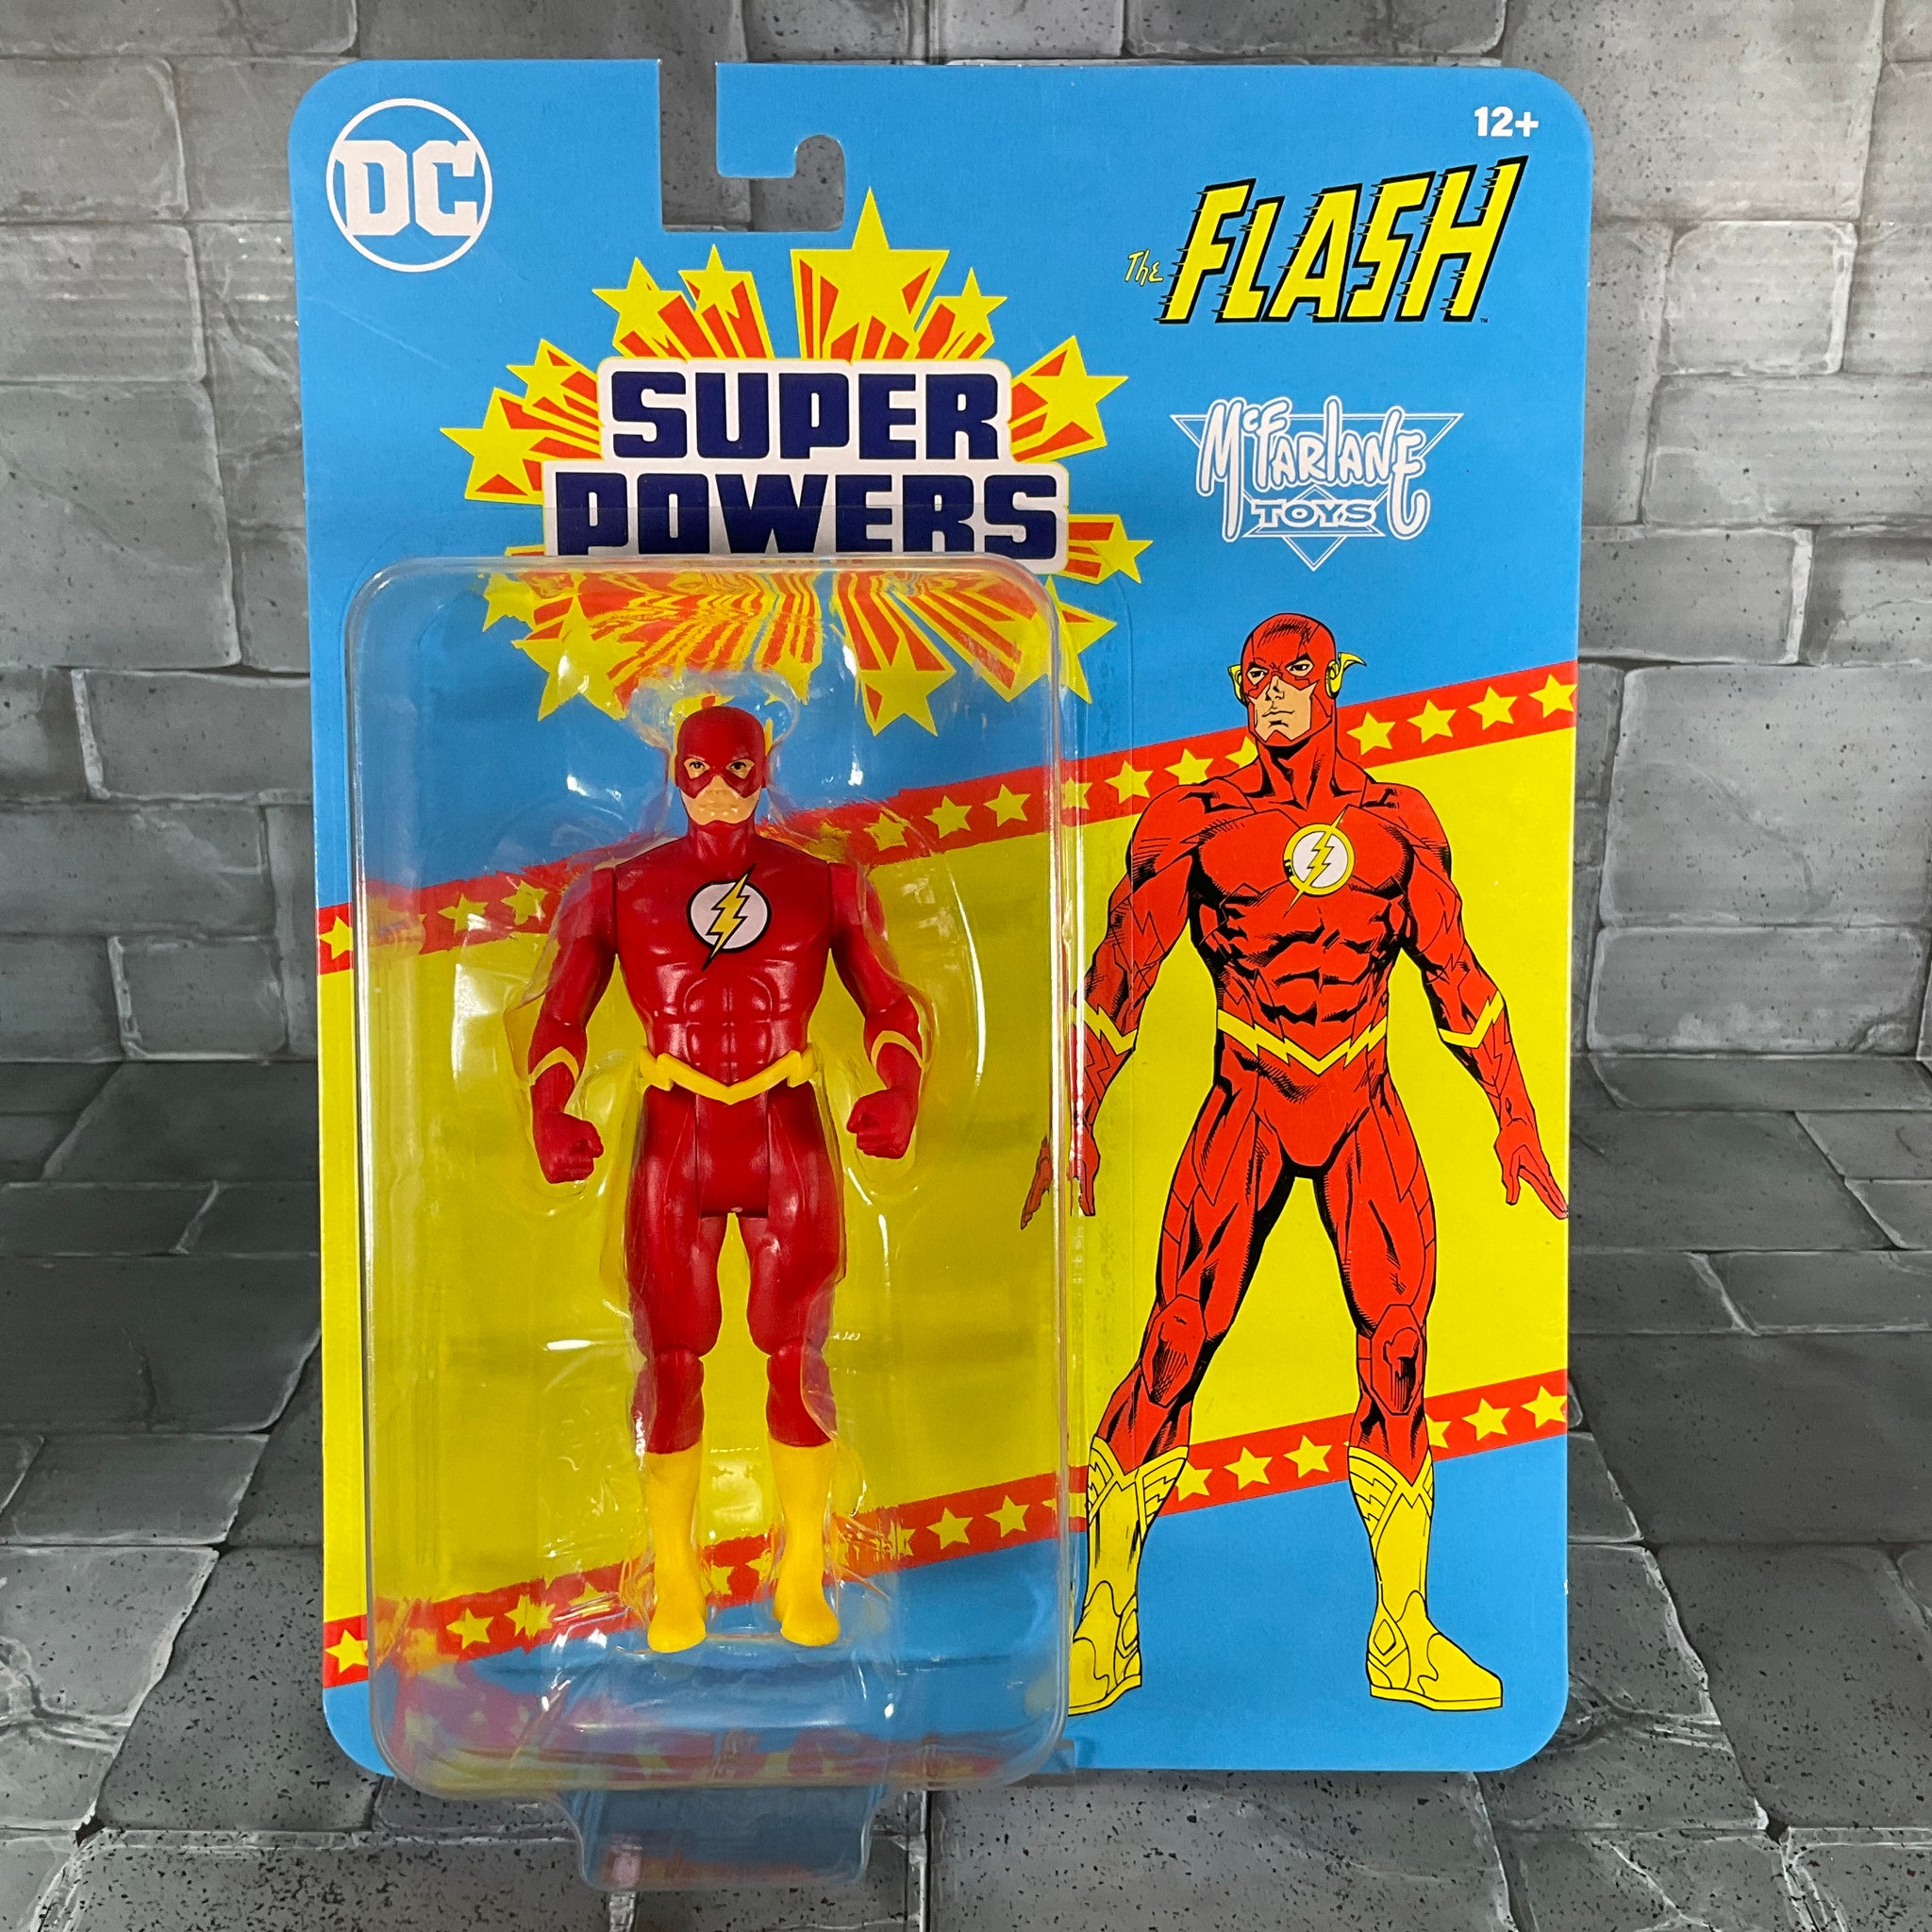 McFarlane Super Powers - The Flash